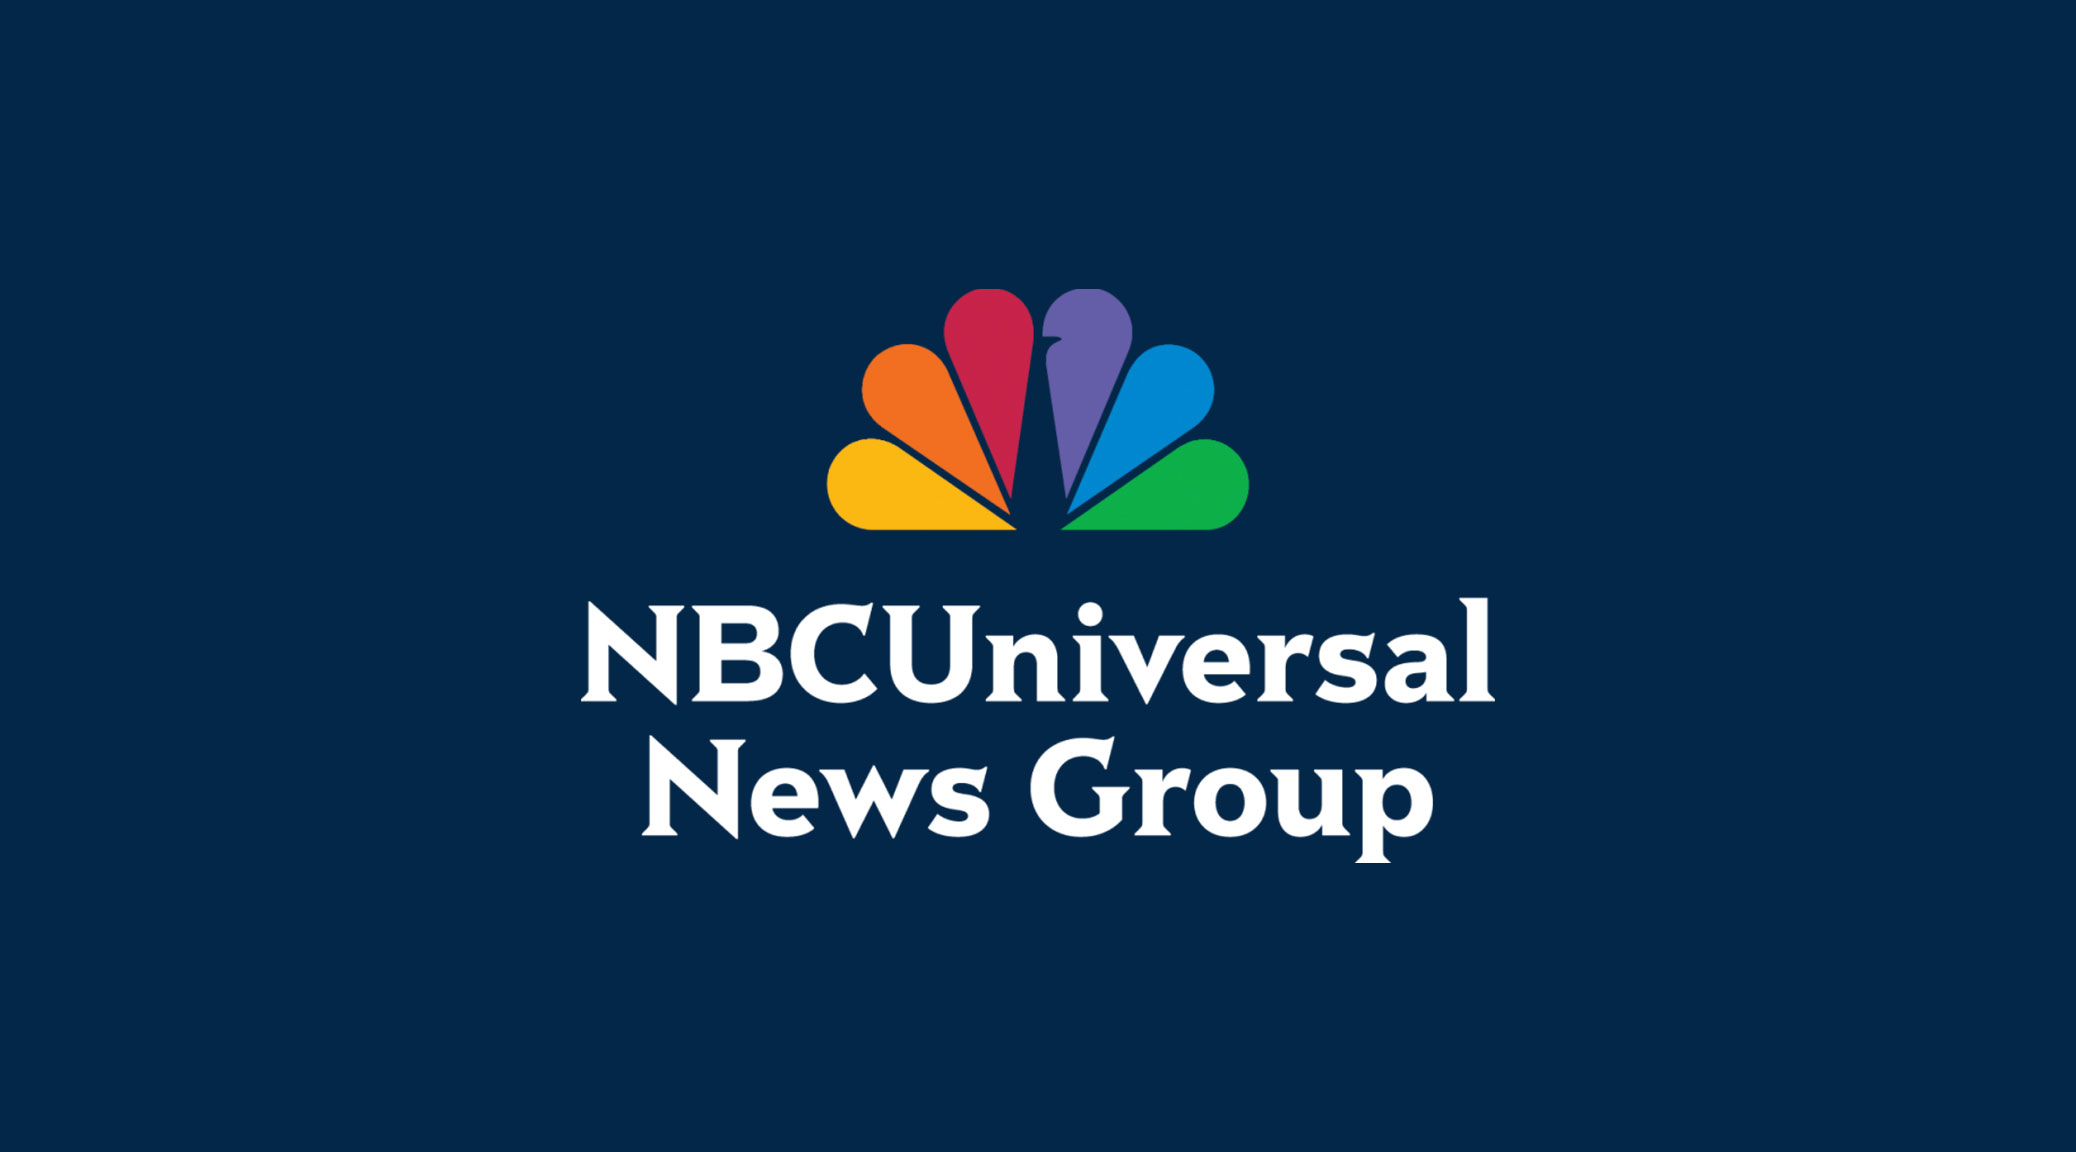 NBCUniversal News Group